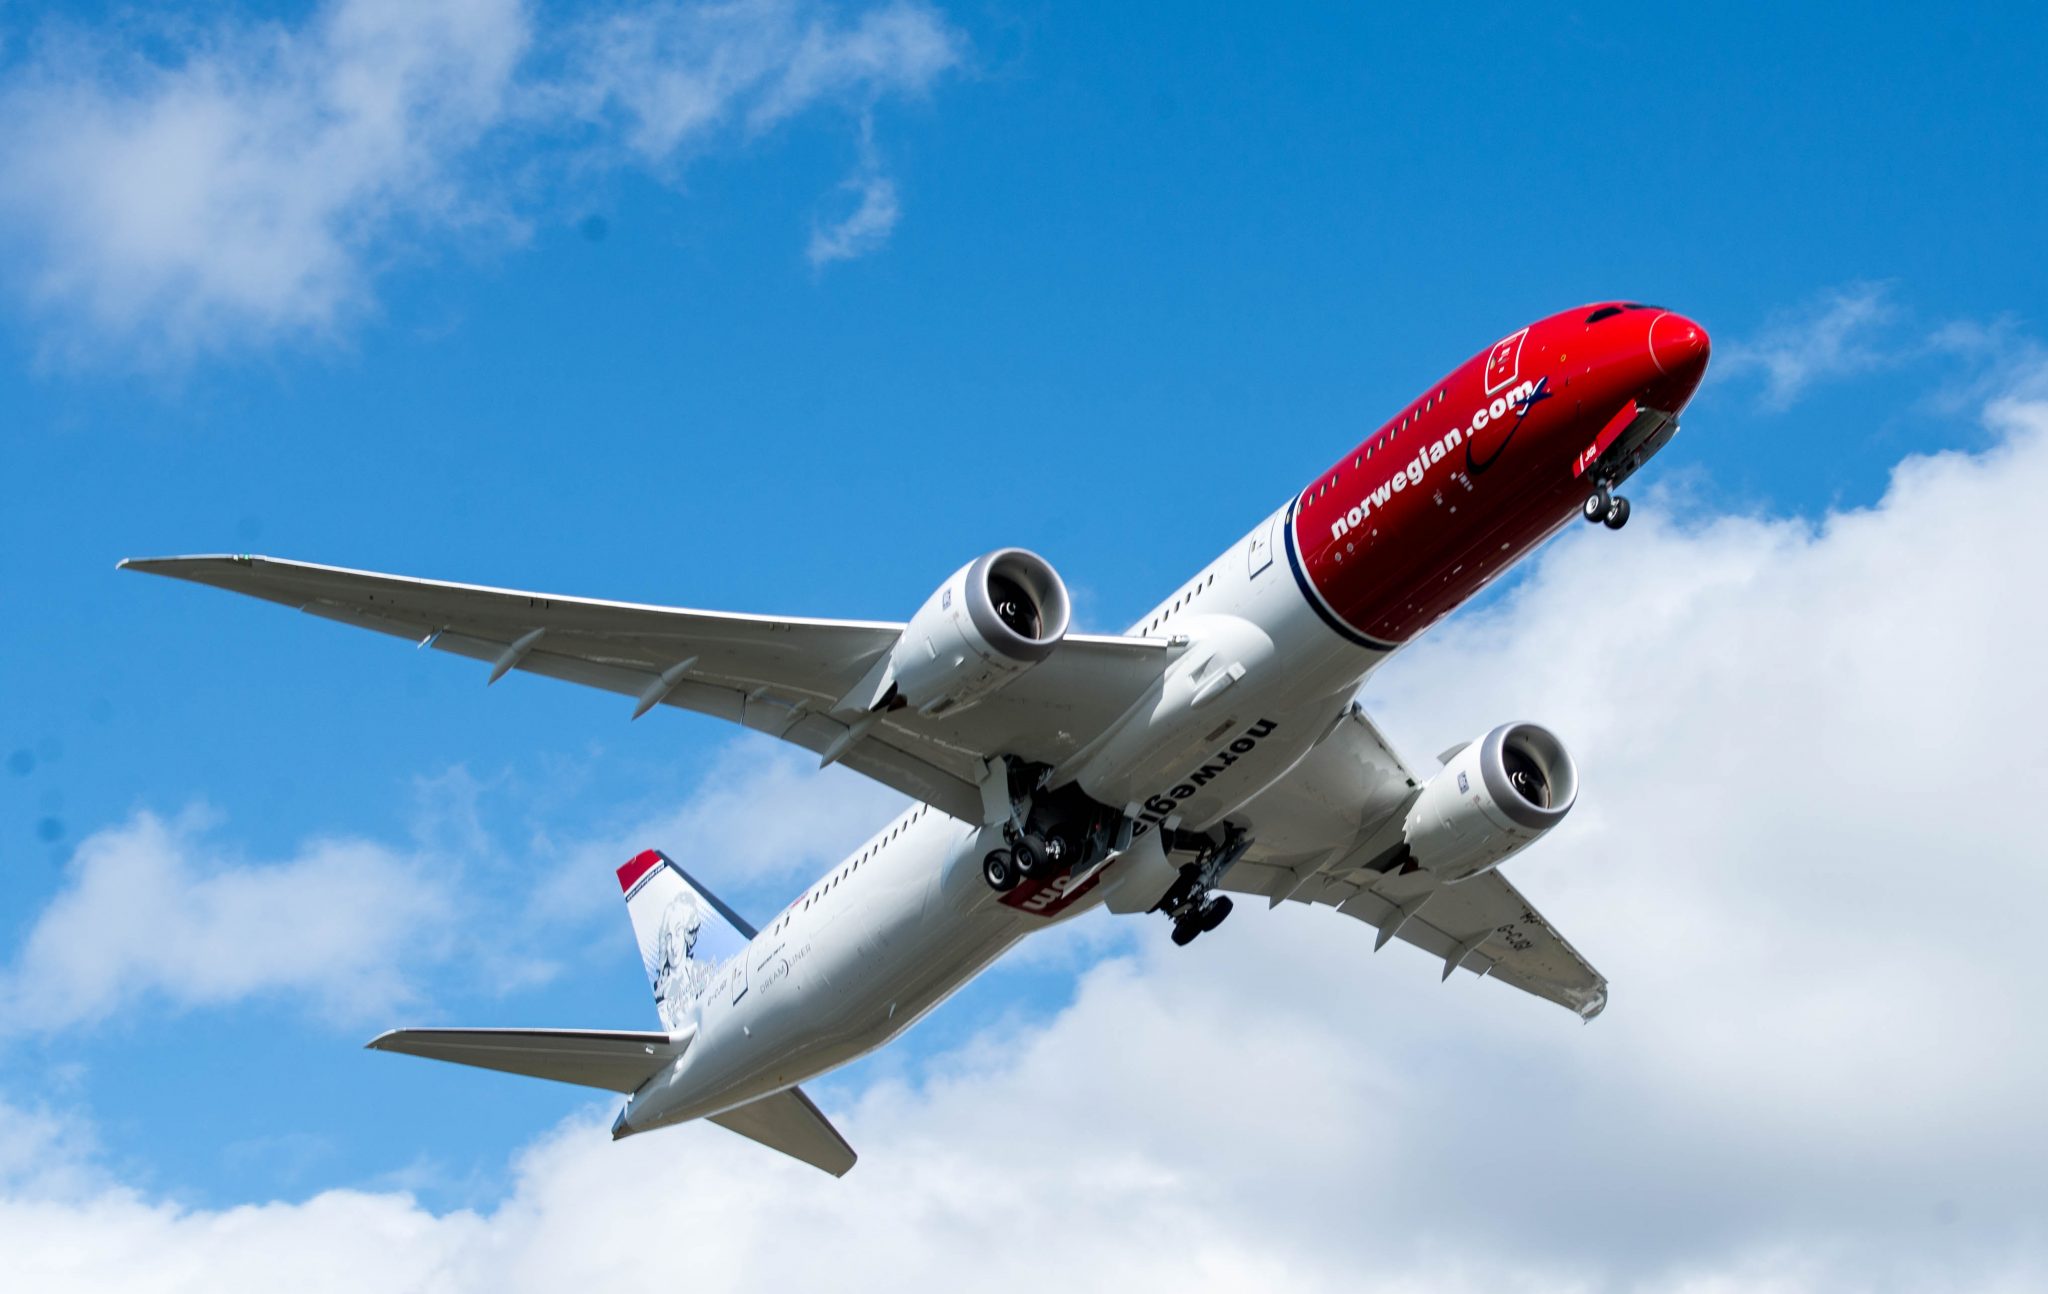 Norwegian sets new record transatlantic flight time from New York to London